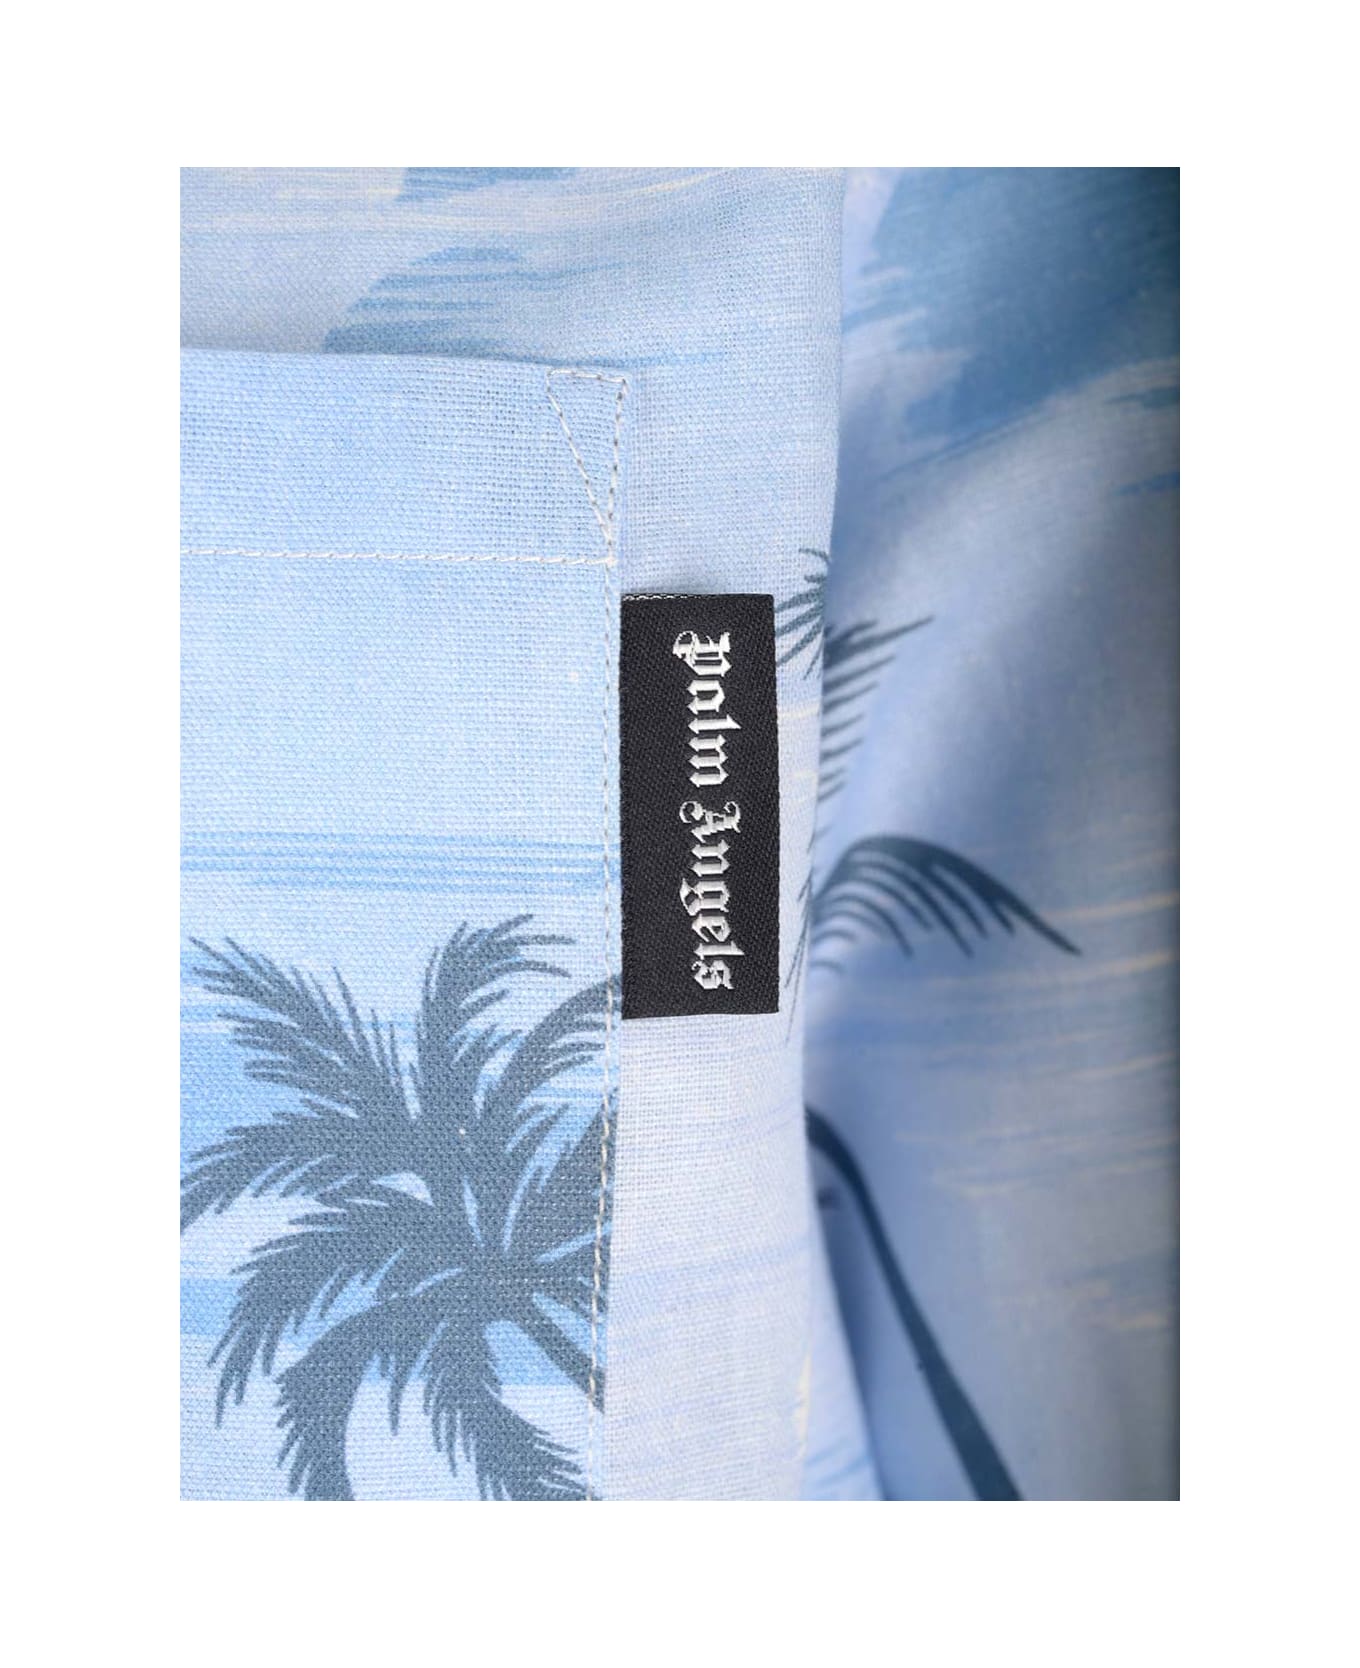 Palm Angels Sunset Print Bowling Shirt - Blu